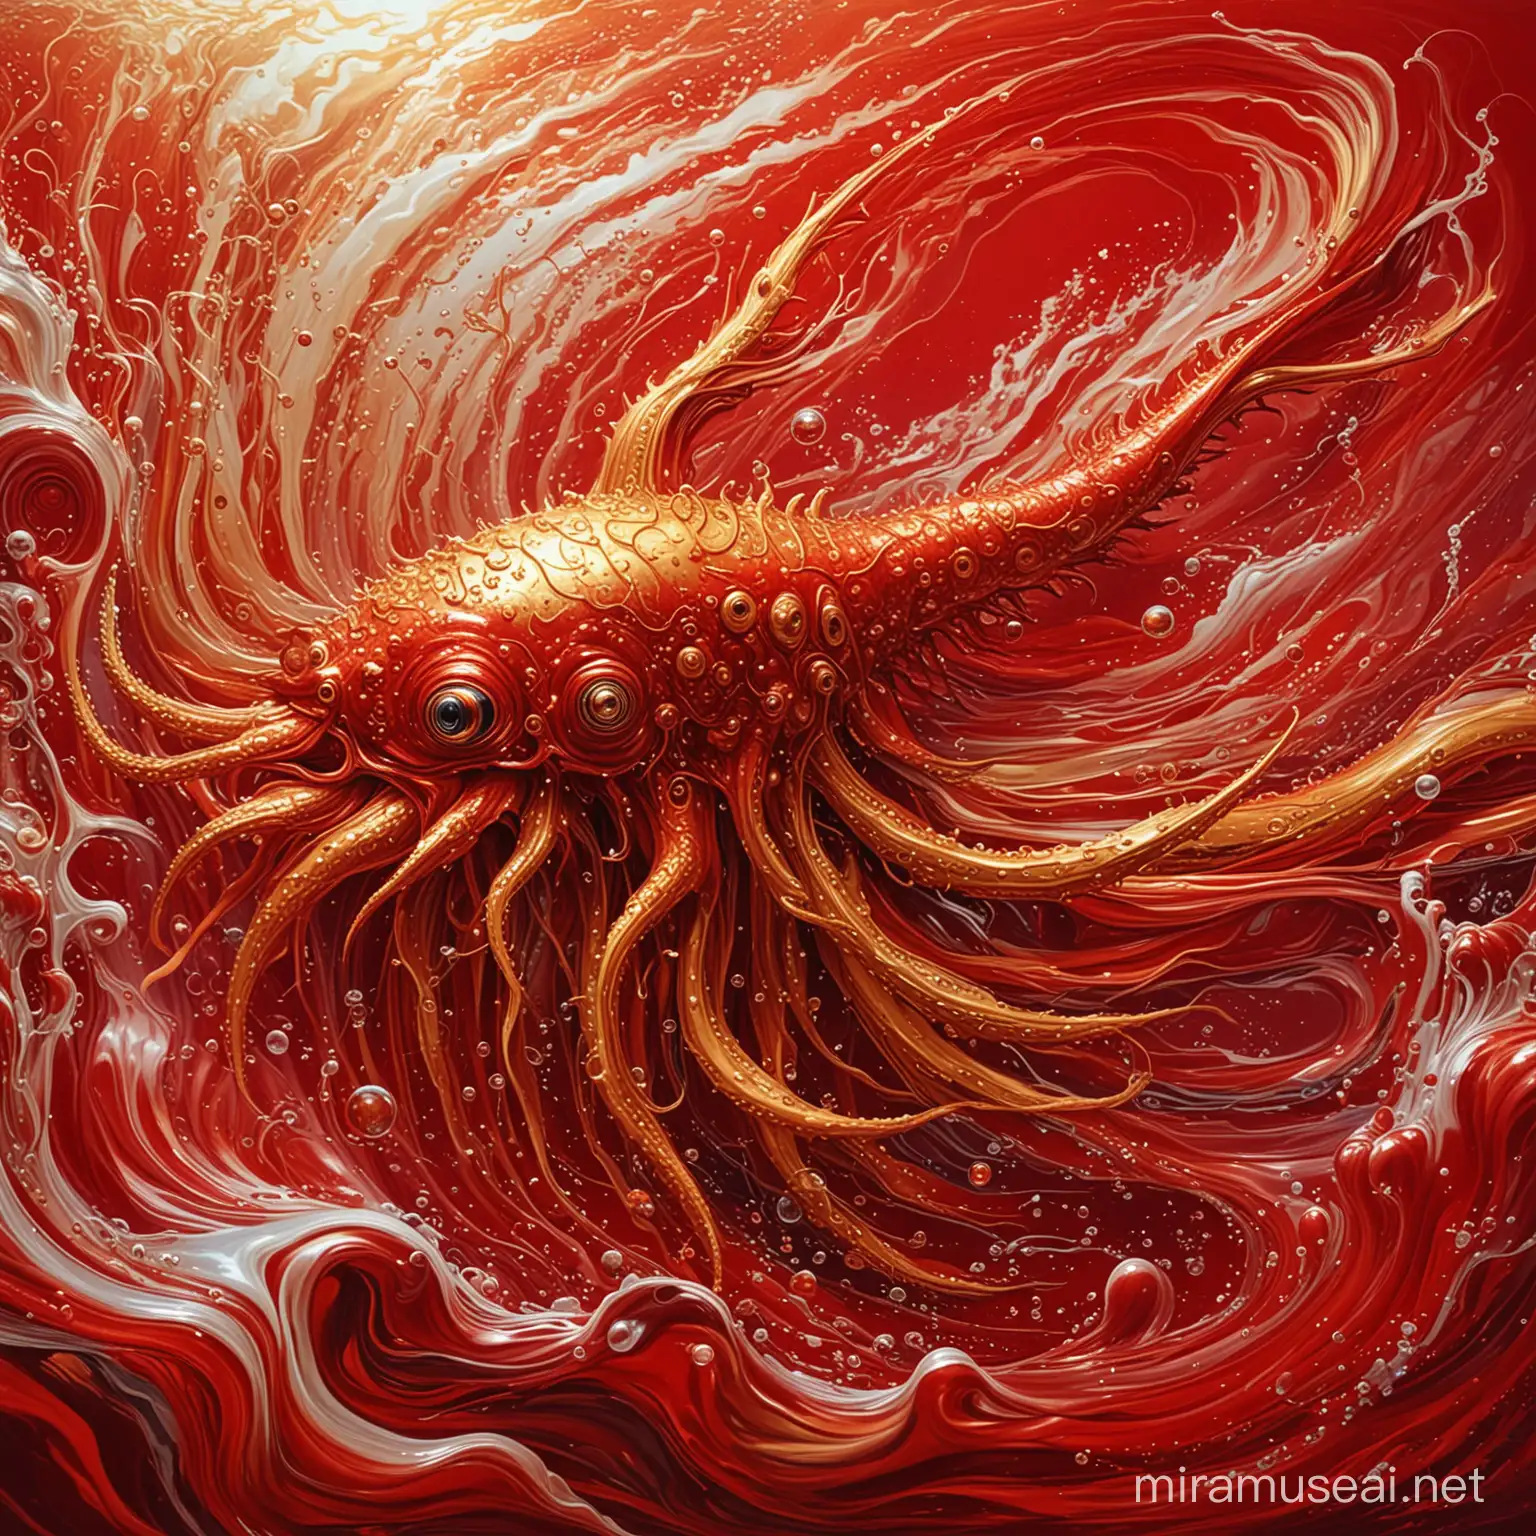 Surreal Metallic Red and Gold Ocean Creature in Liquid Environment